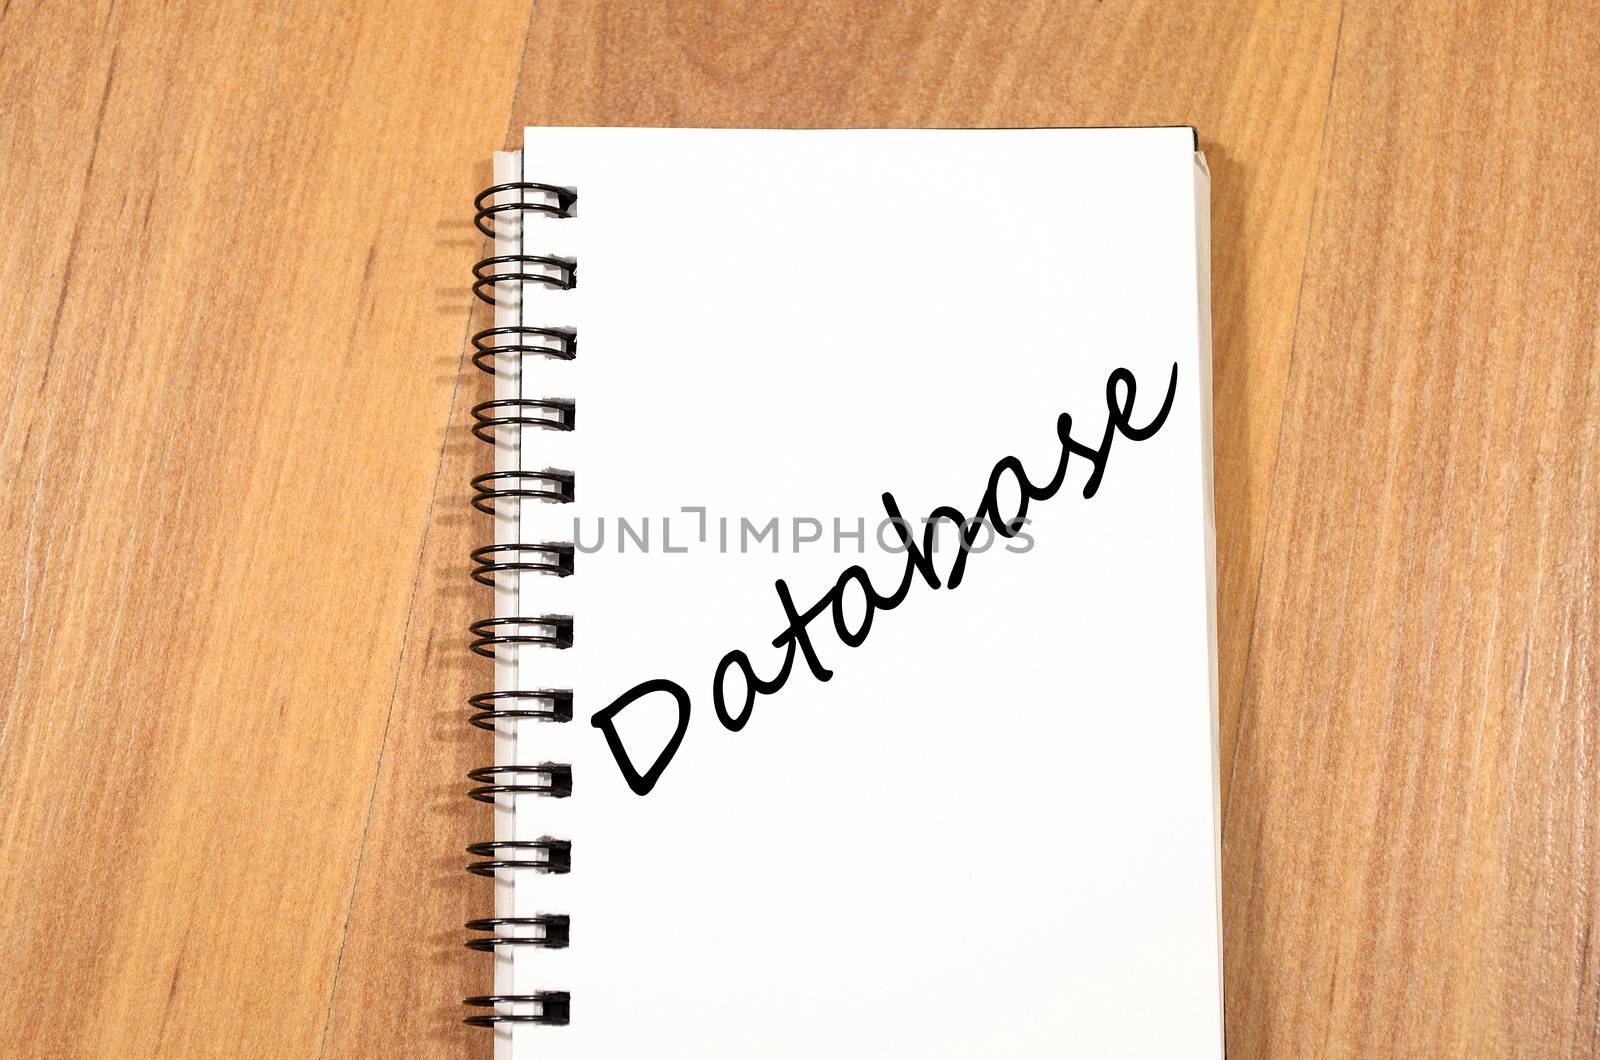 Database write on notebook by eenevski